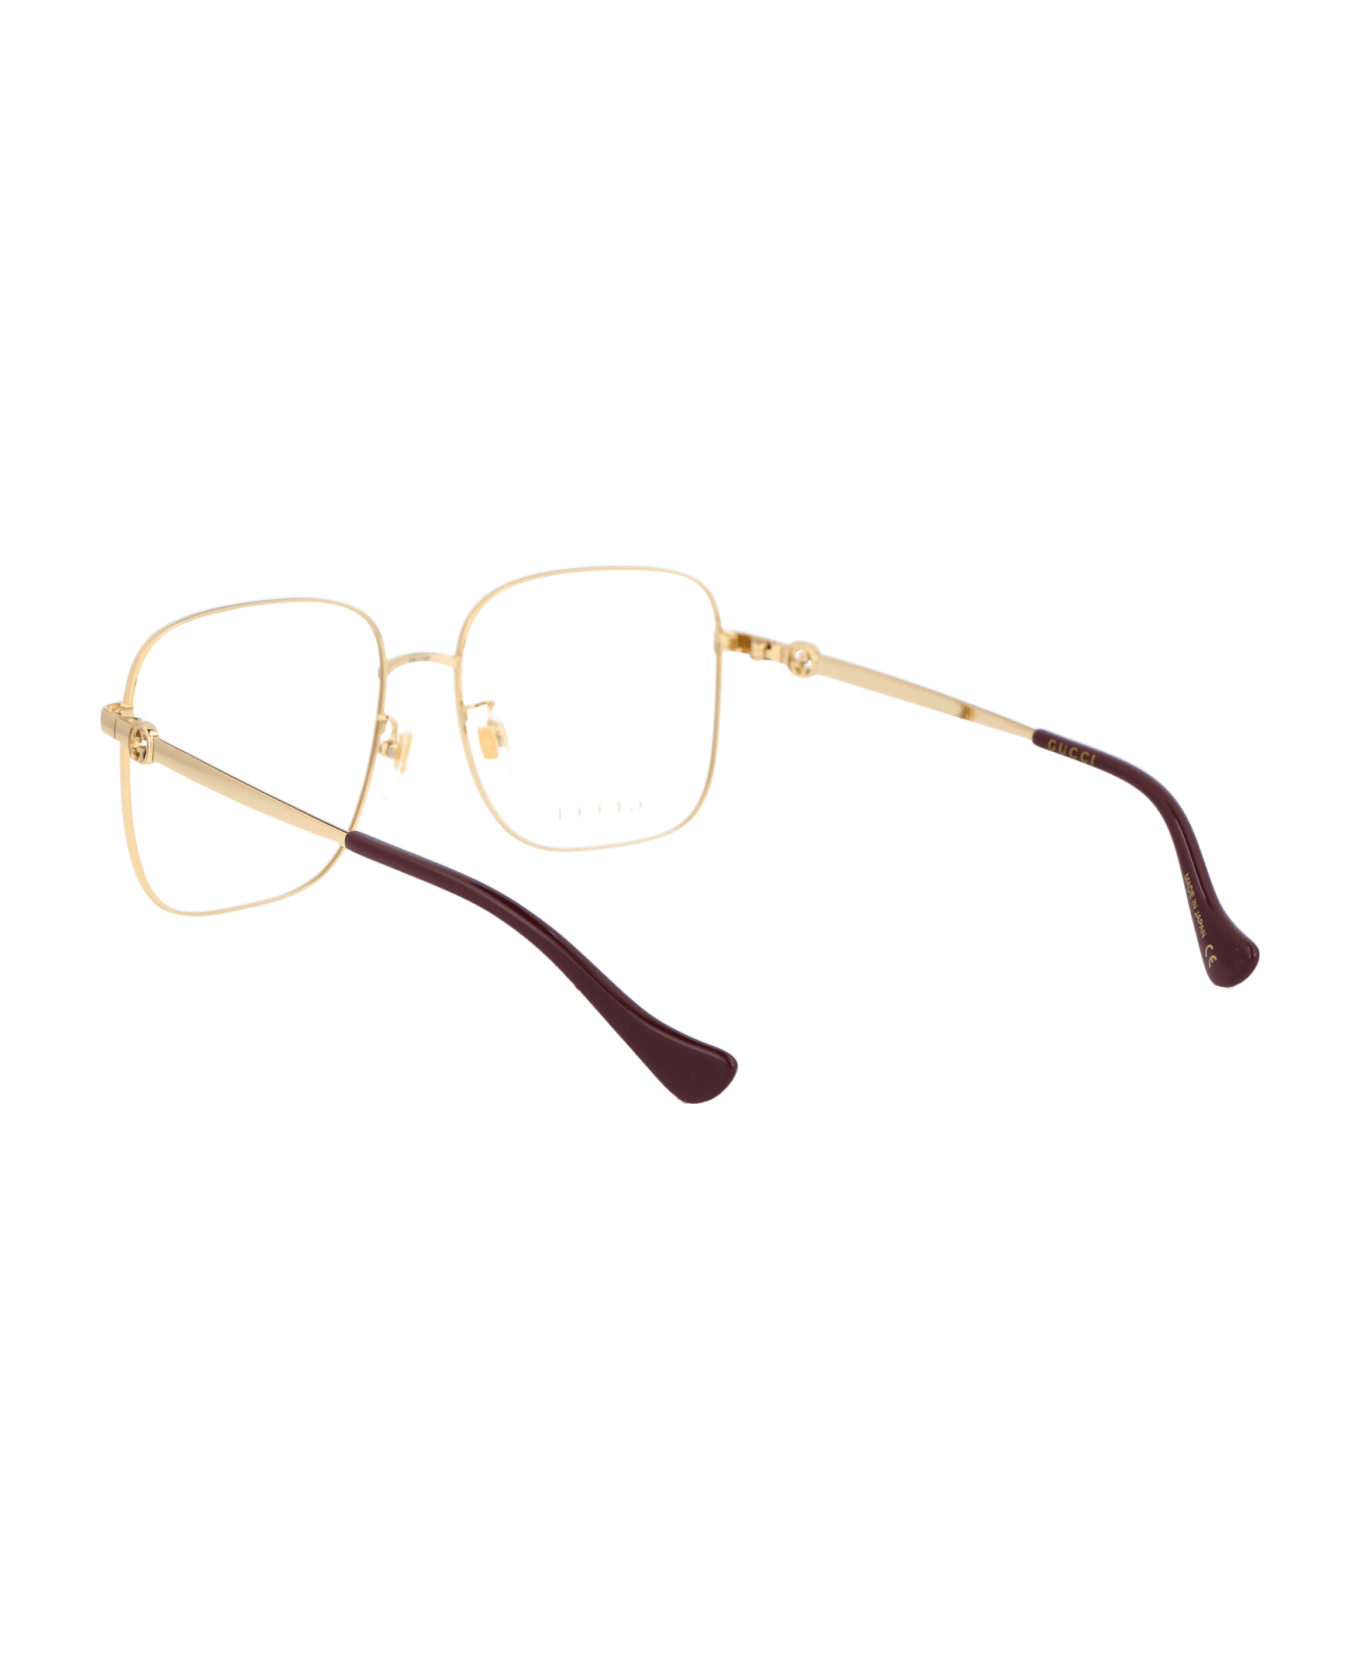 Gucci Eyewear Gg1092oa Glasses - 002 GOLD GOLD TRANSPARENT